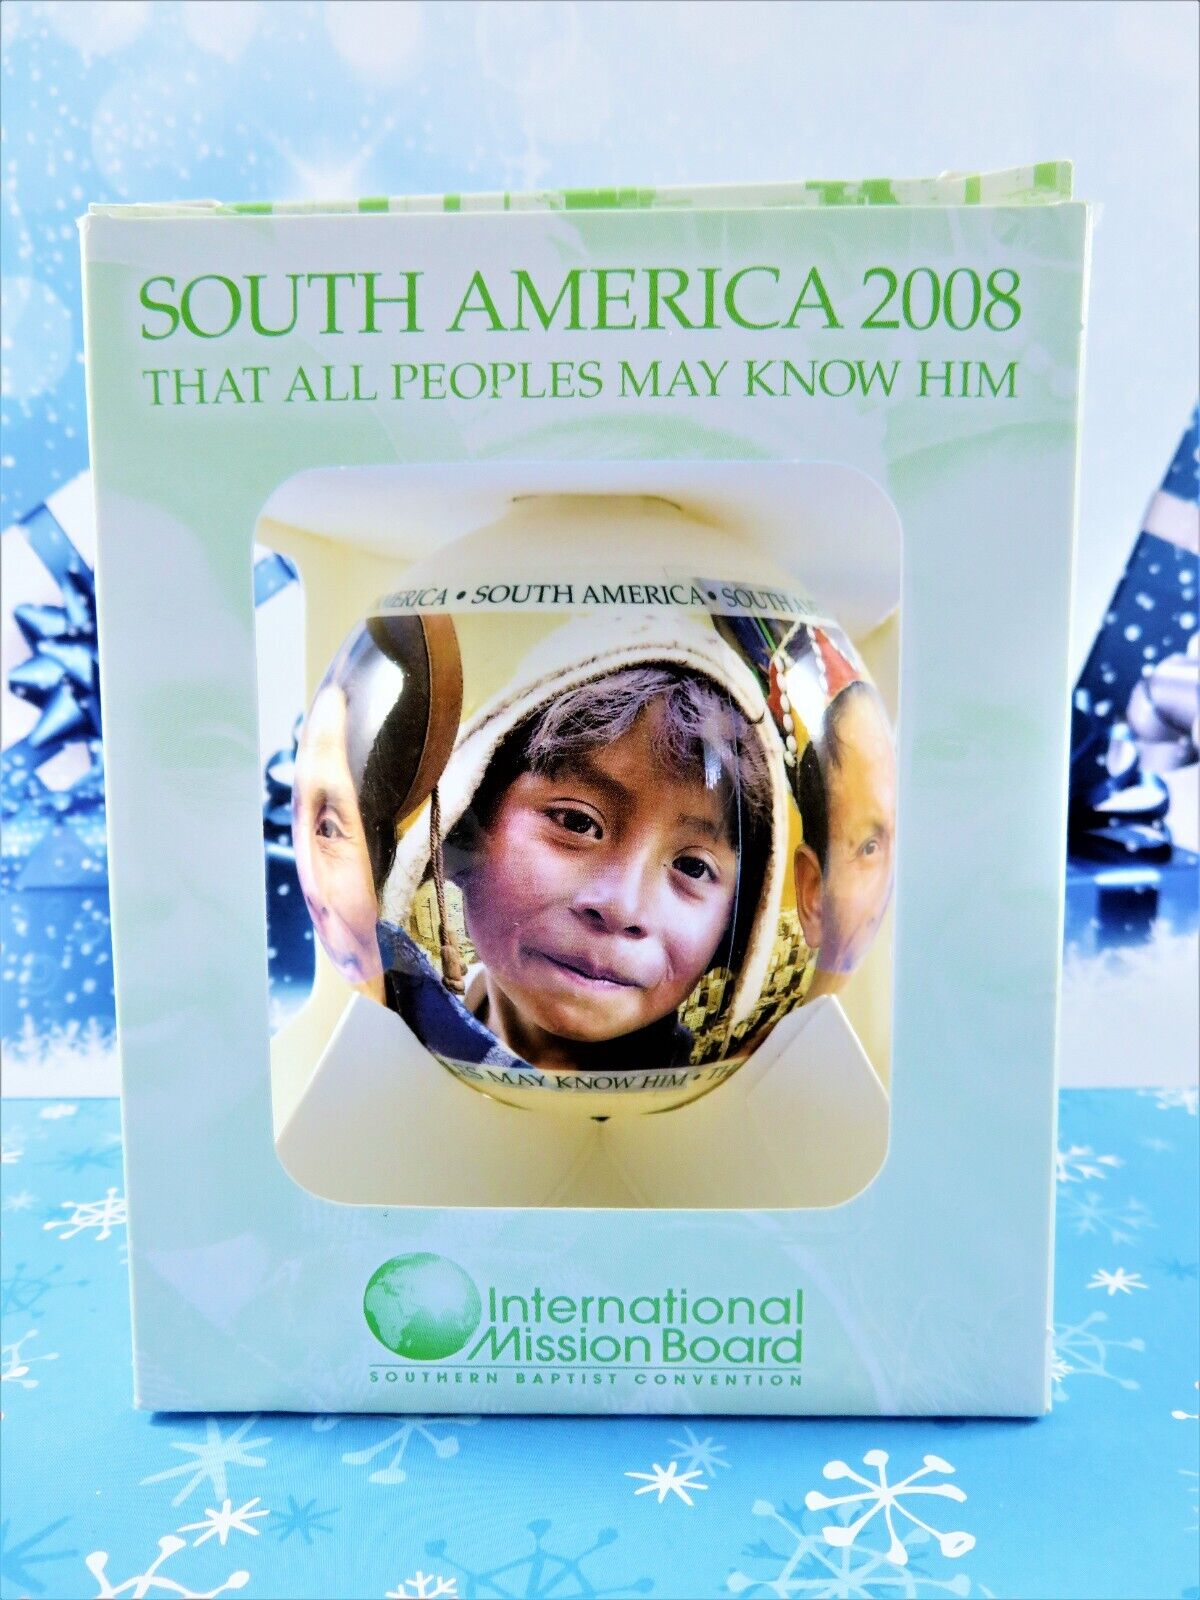 Intl Mission Board Glass Christmas Ornament 2008 South America Ltd Edition IOB